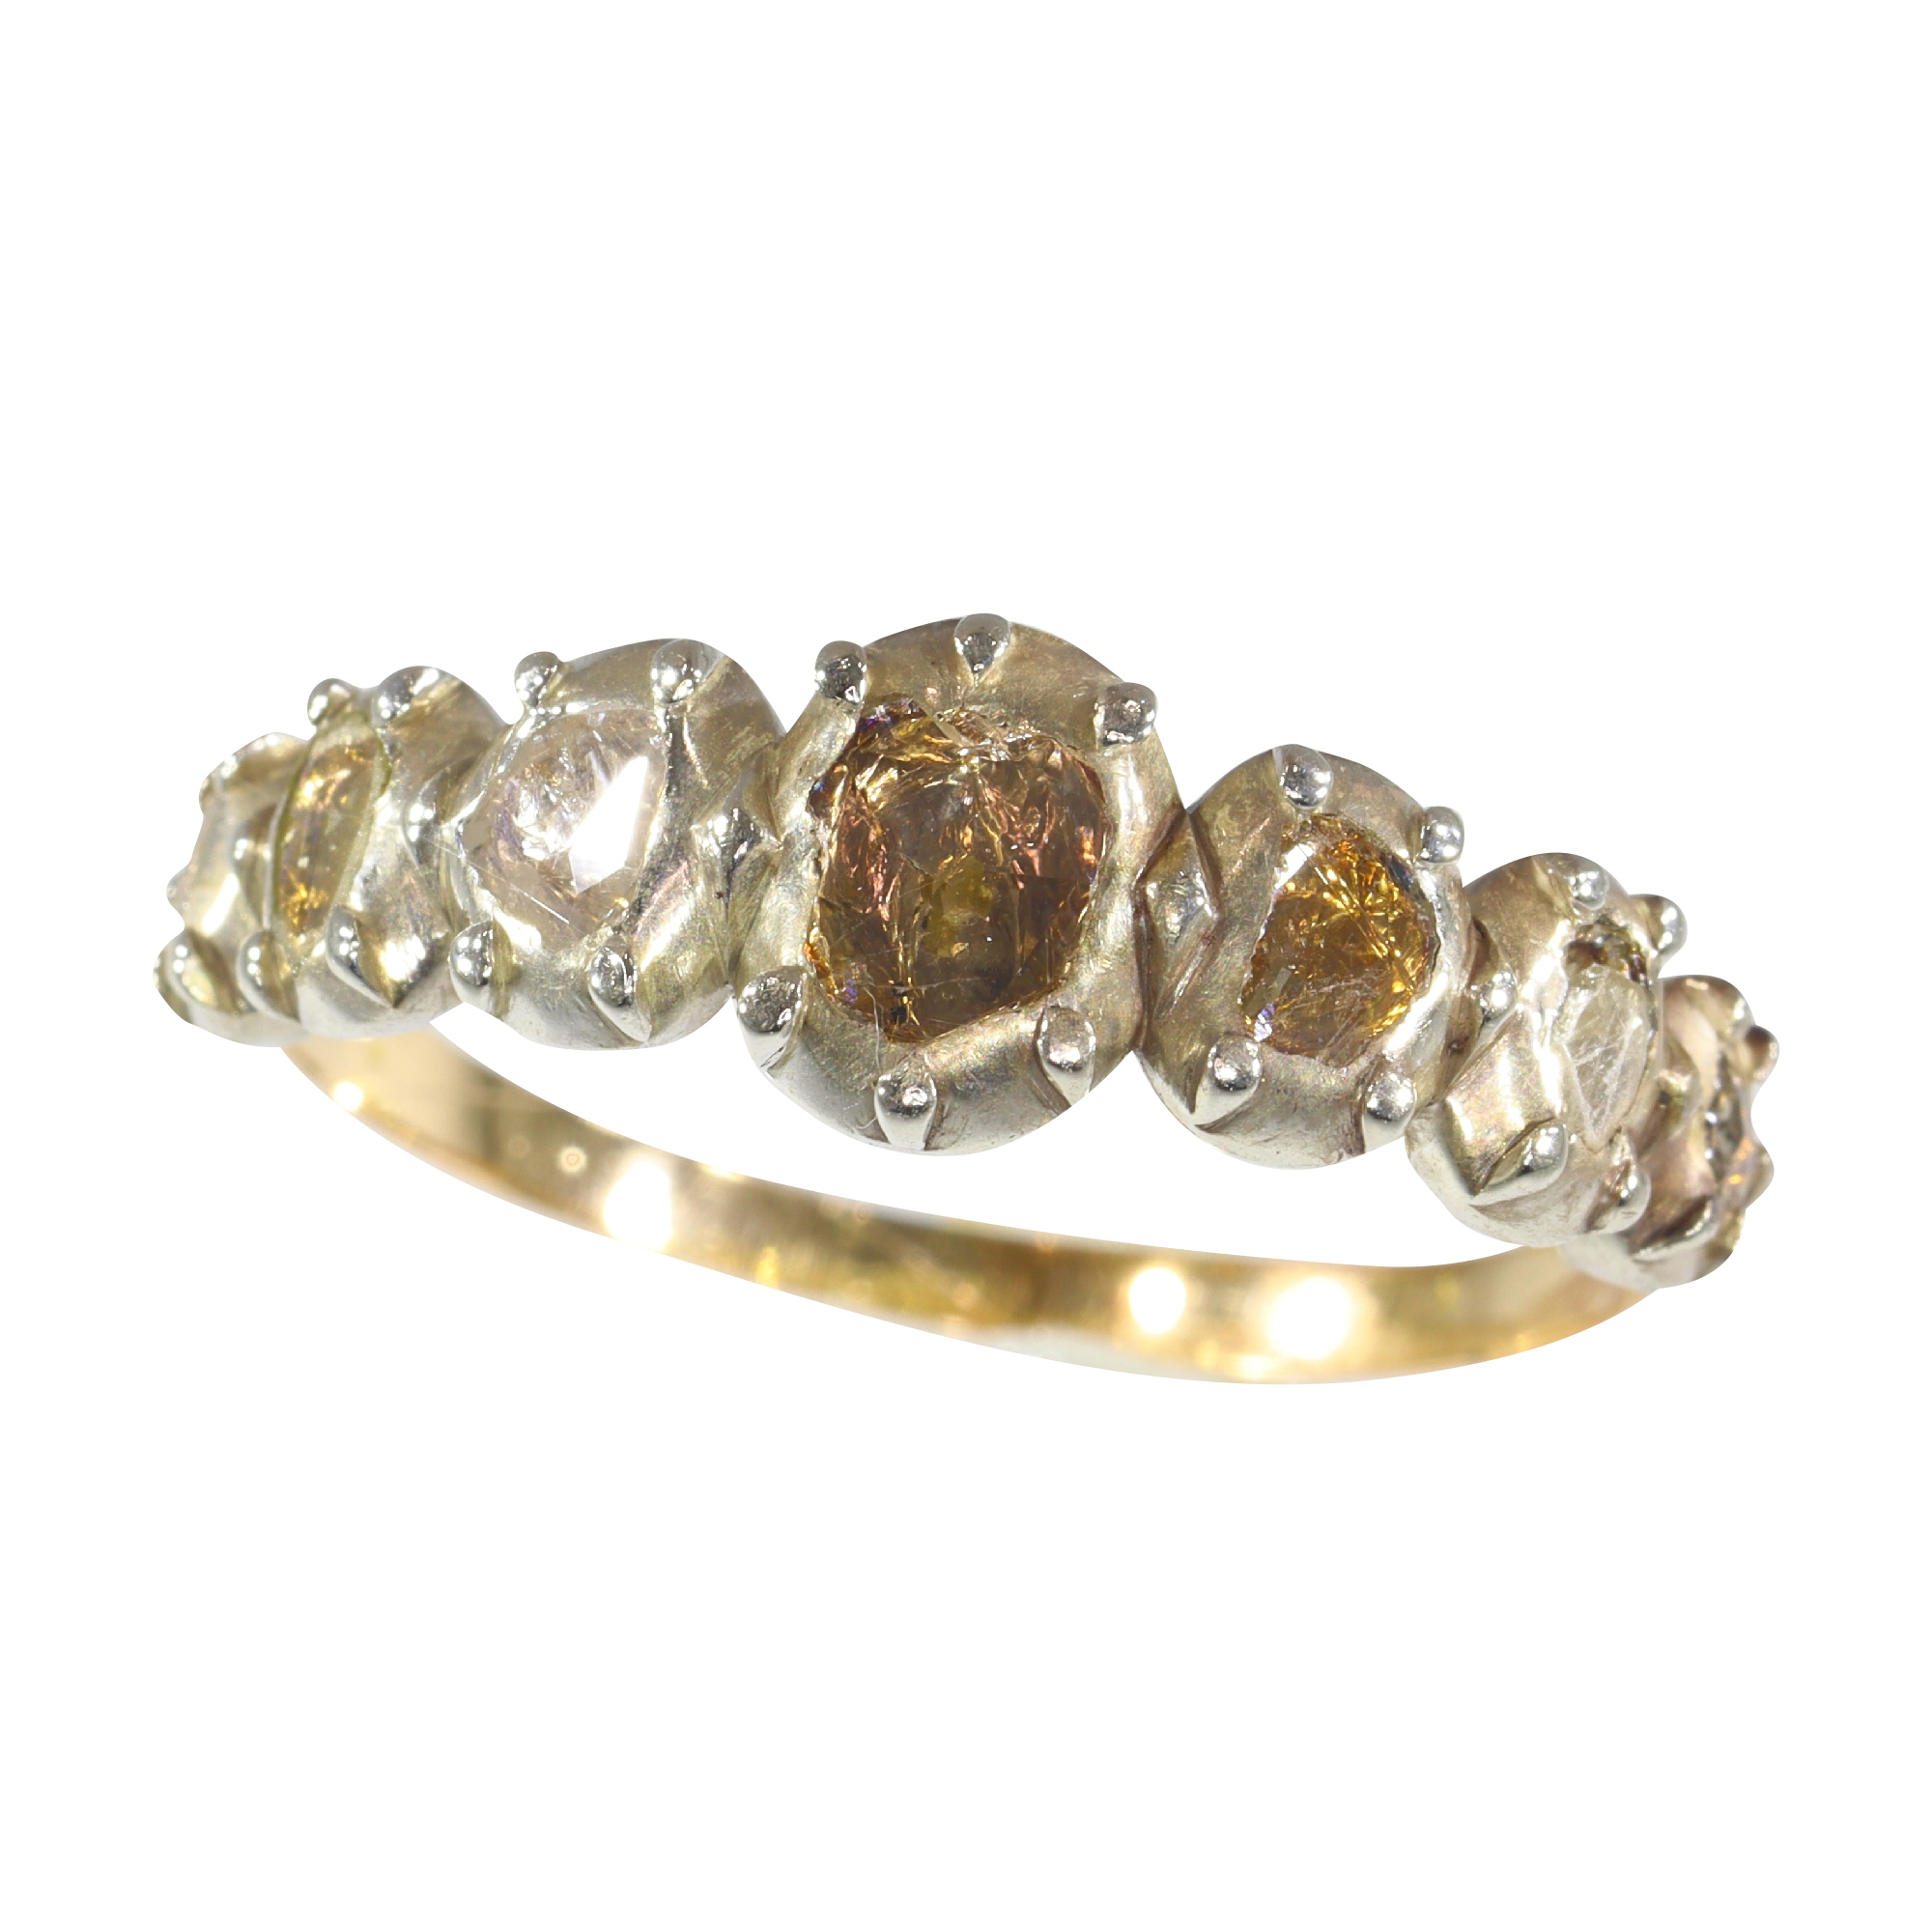 Antique diamond inline ring